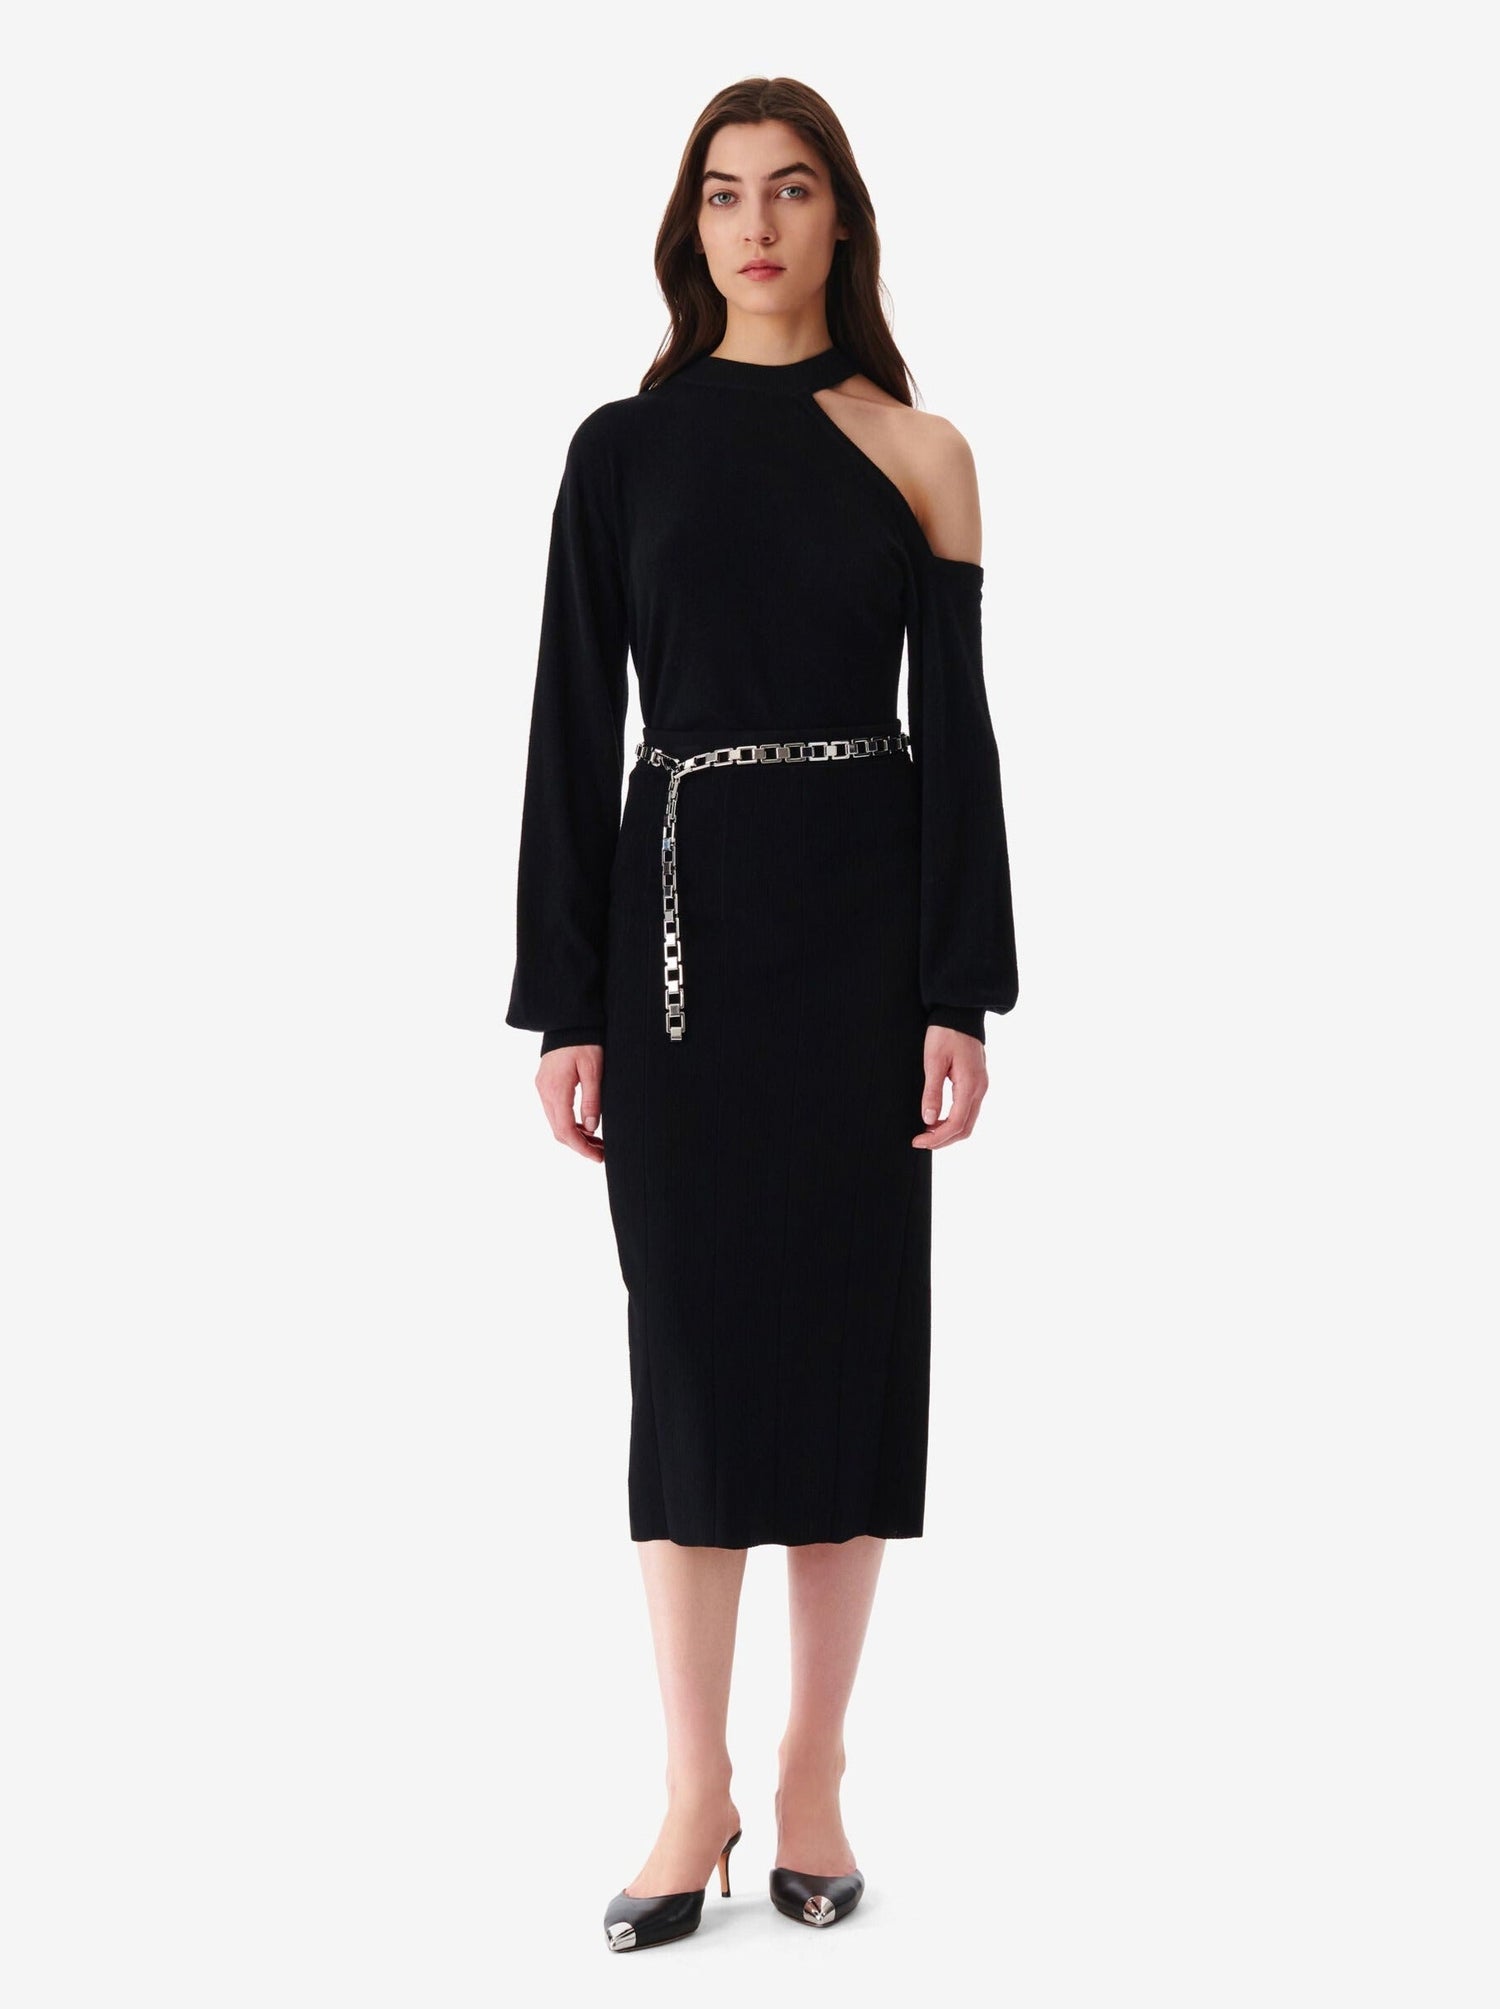 CAIFA knitted skirt, black